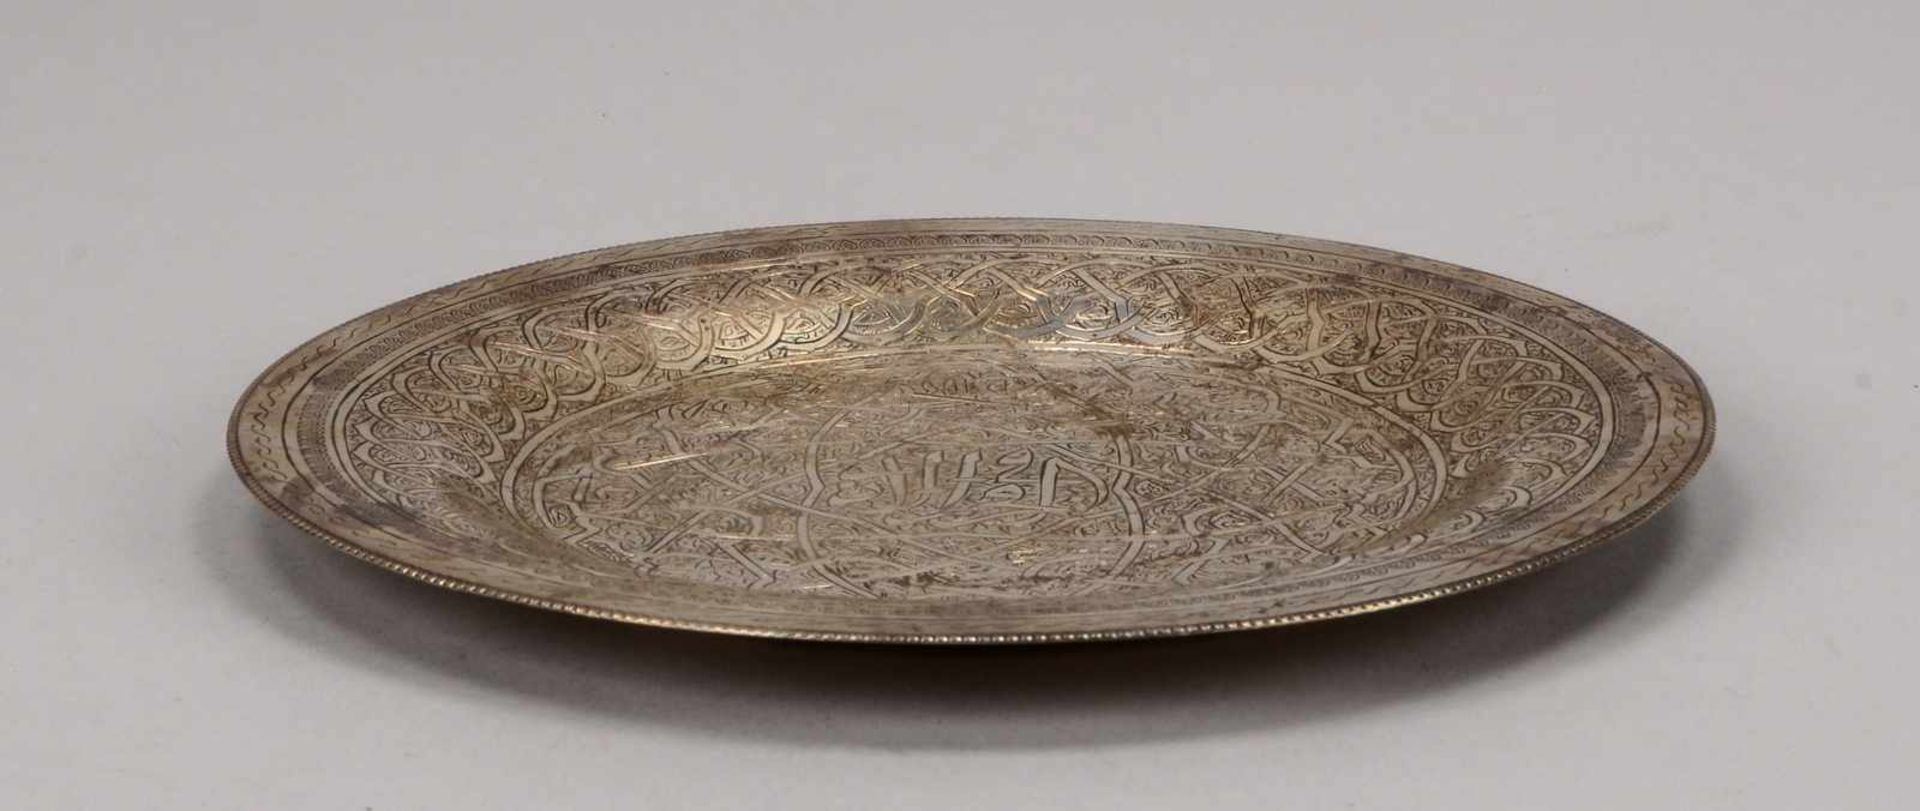 Silberschale (wohl Persien), alt, Spiegel mit feinen Handgravuren, verso 3-fach punziert;